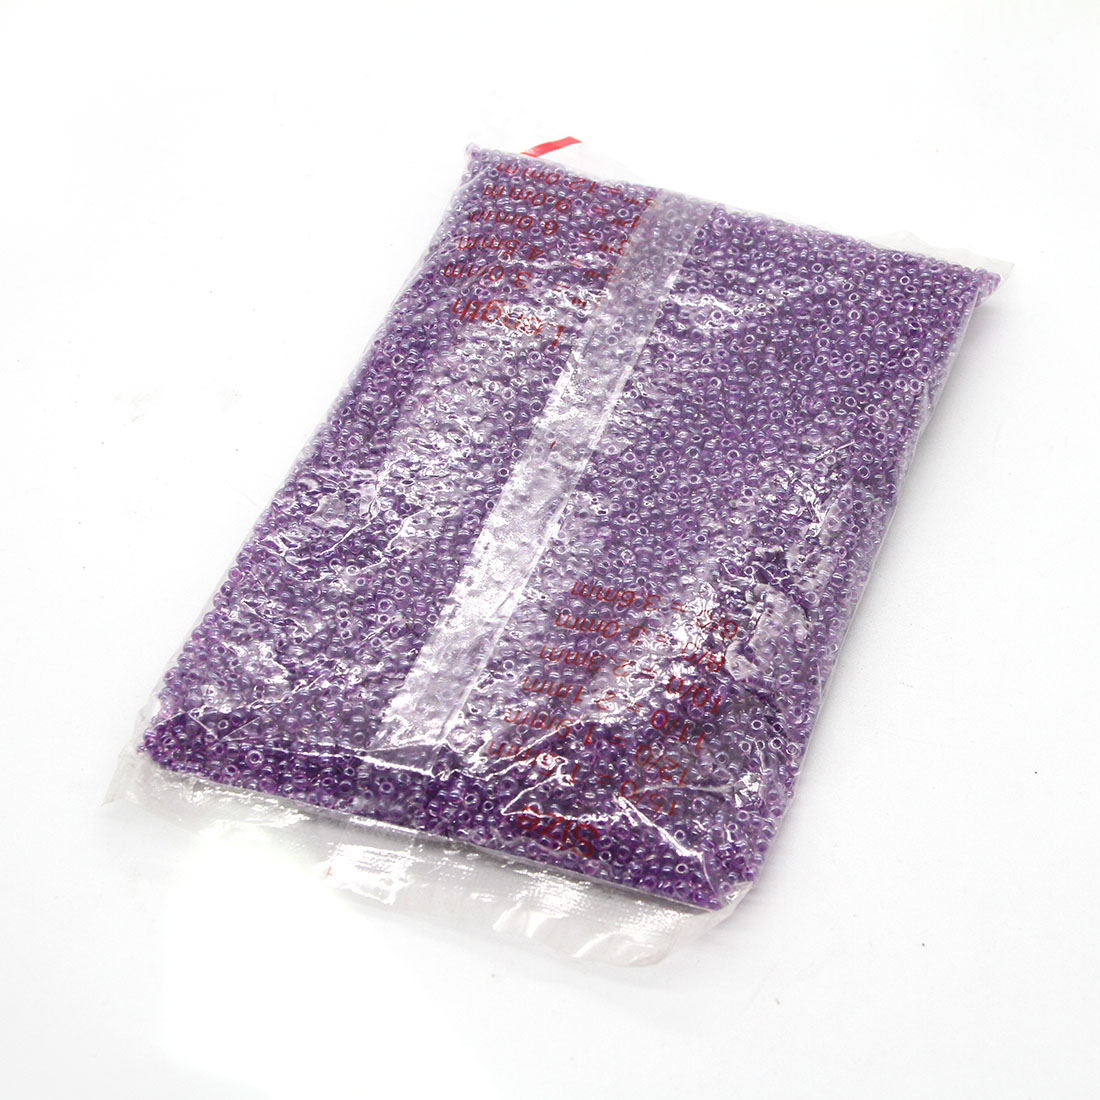 Grape purple 3mm 10 thousand packs